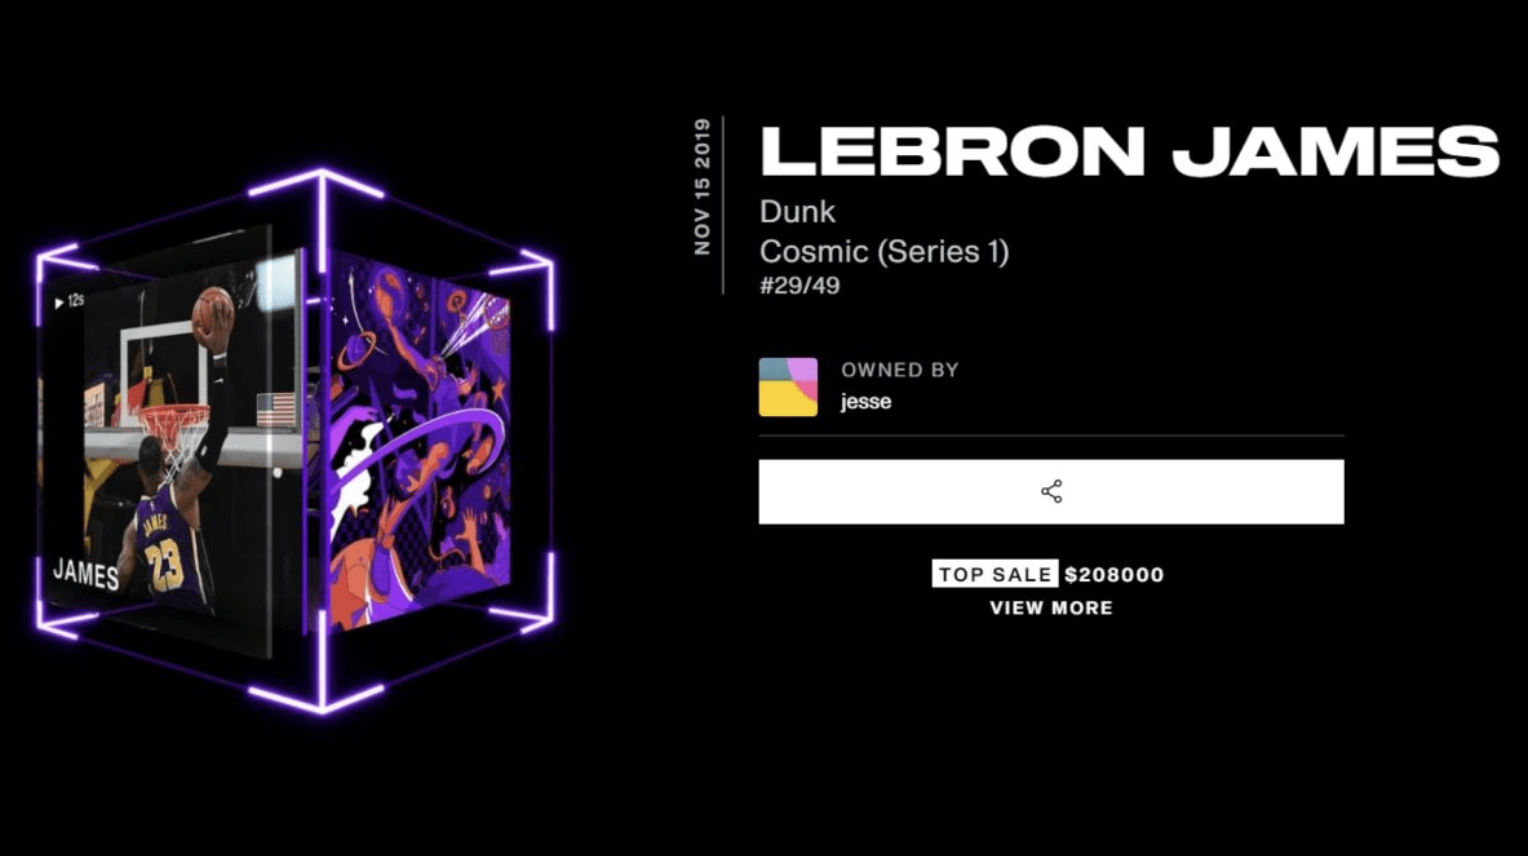 LeBron James “Cosmic” Dunk #29